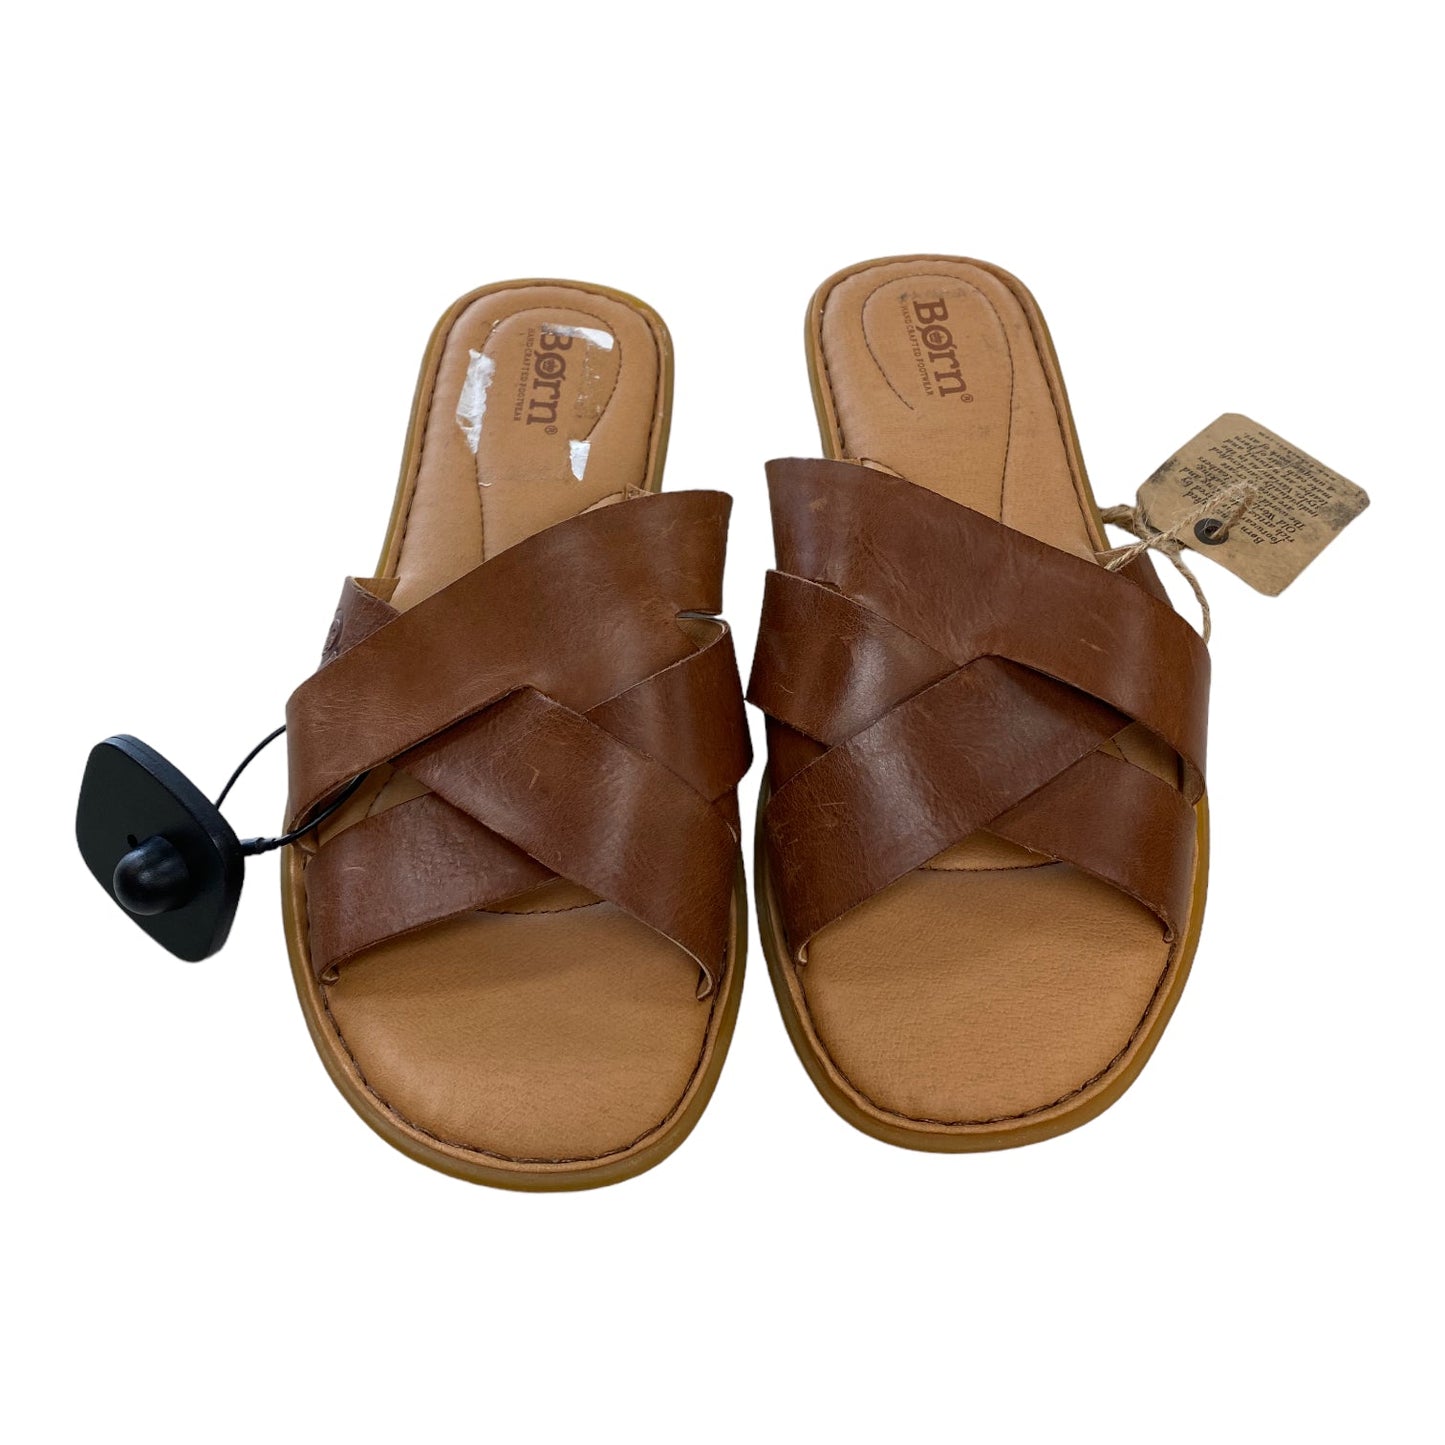 Tan Sandals Flats Born, Size 8